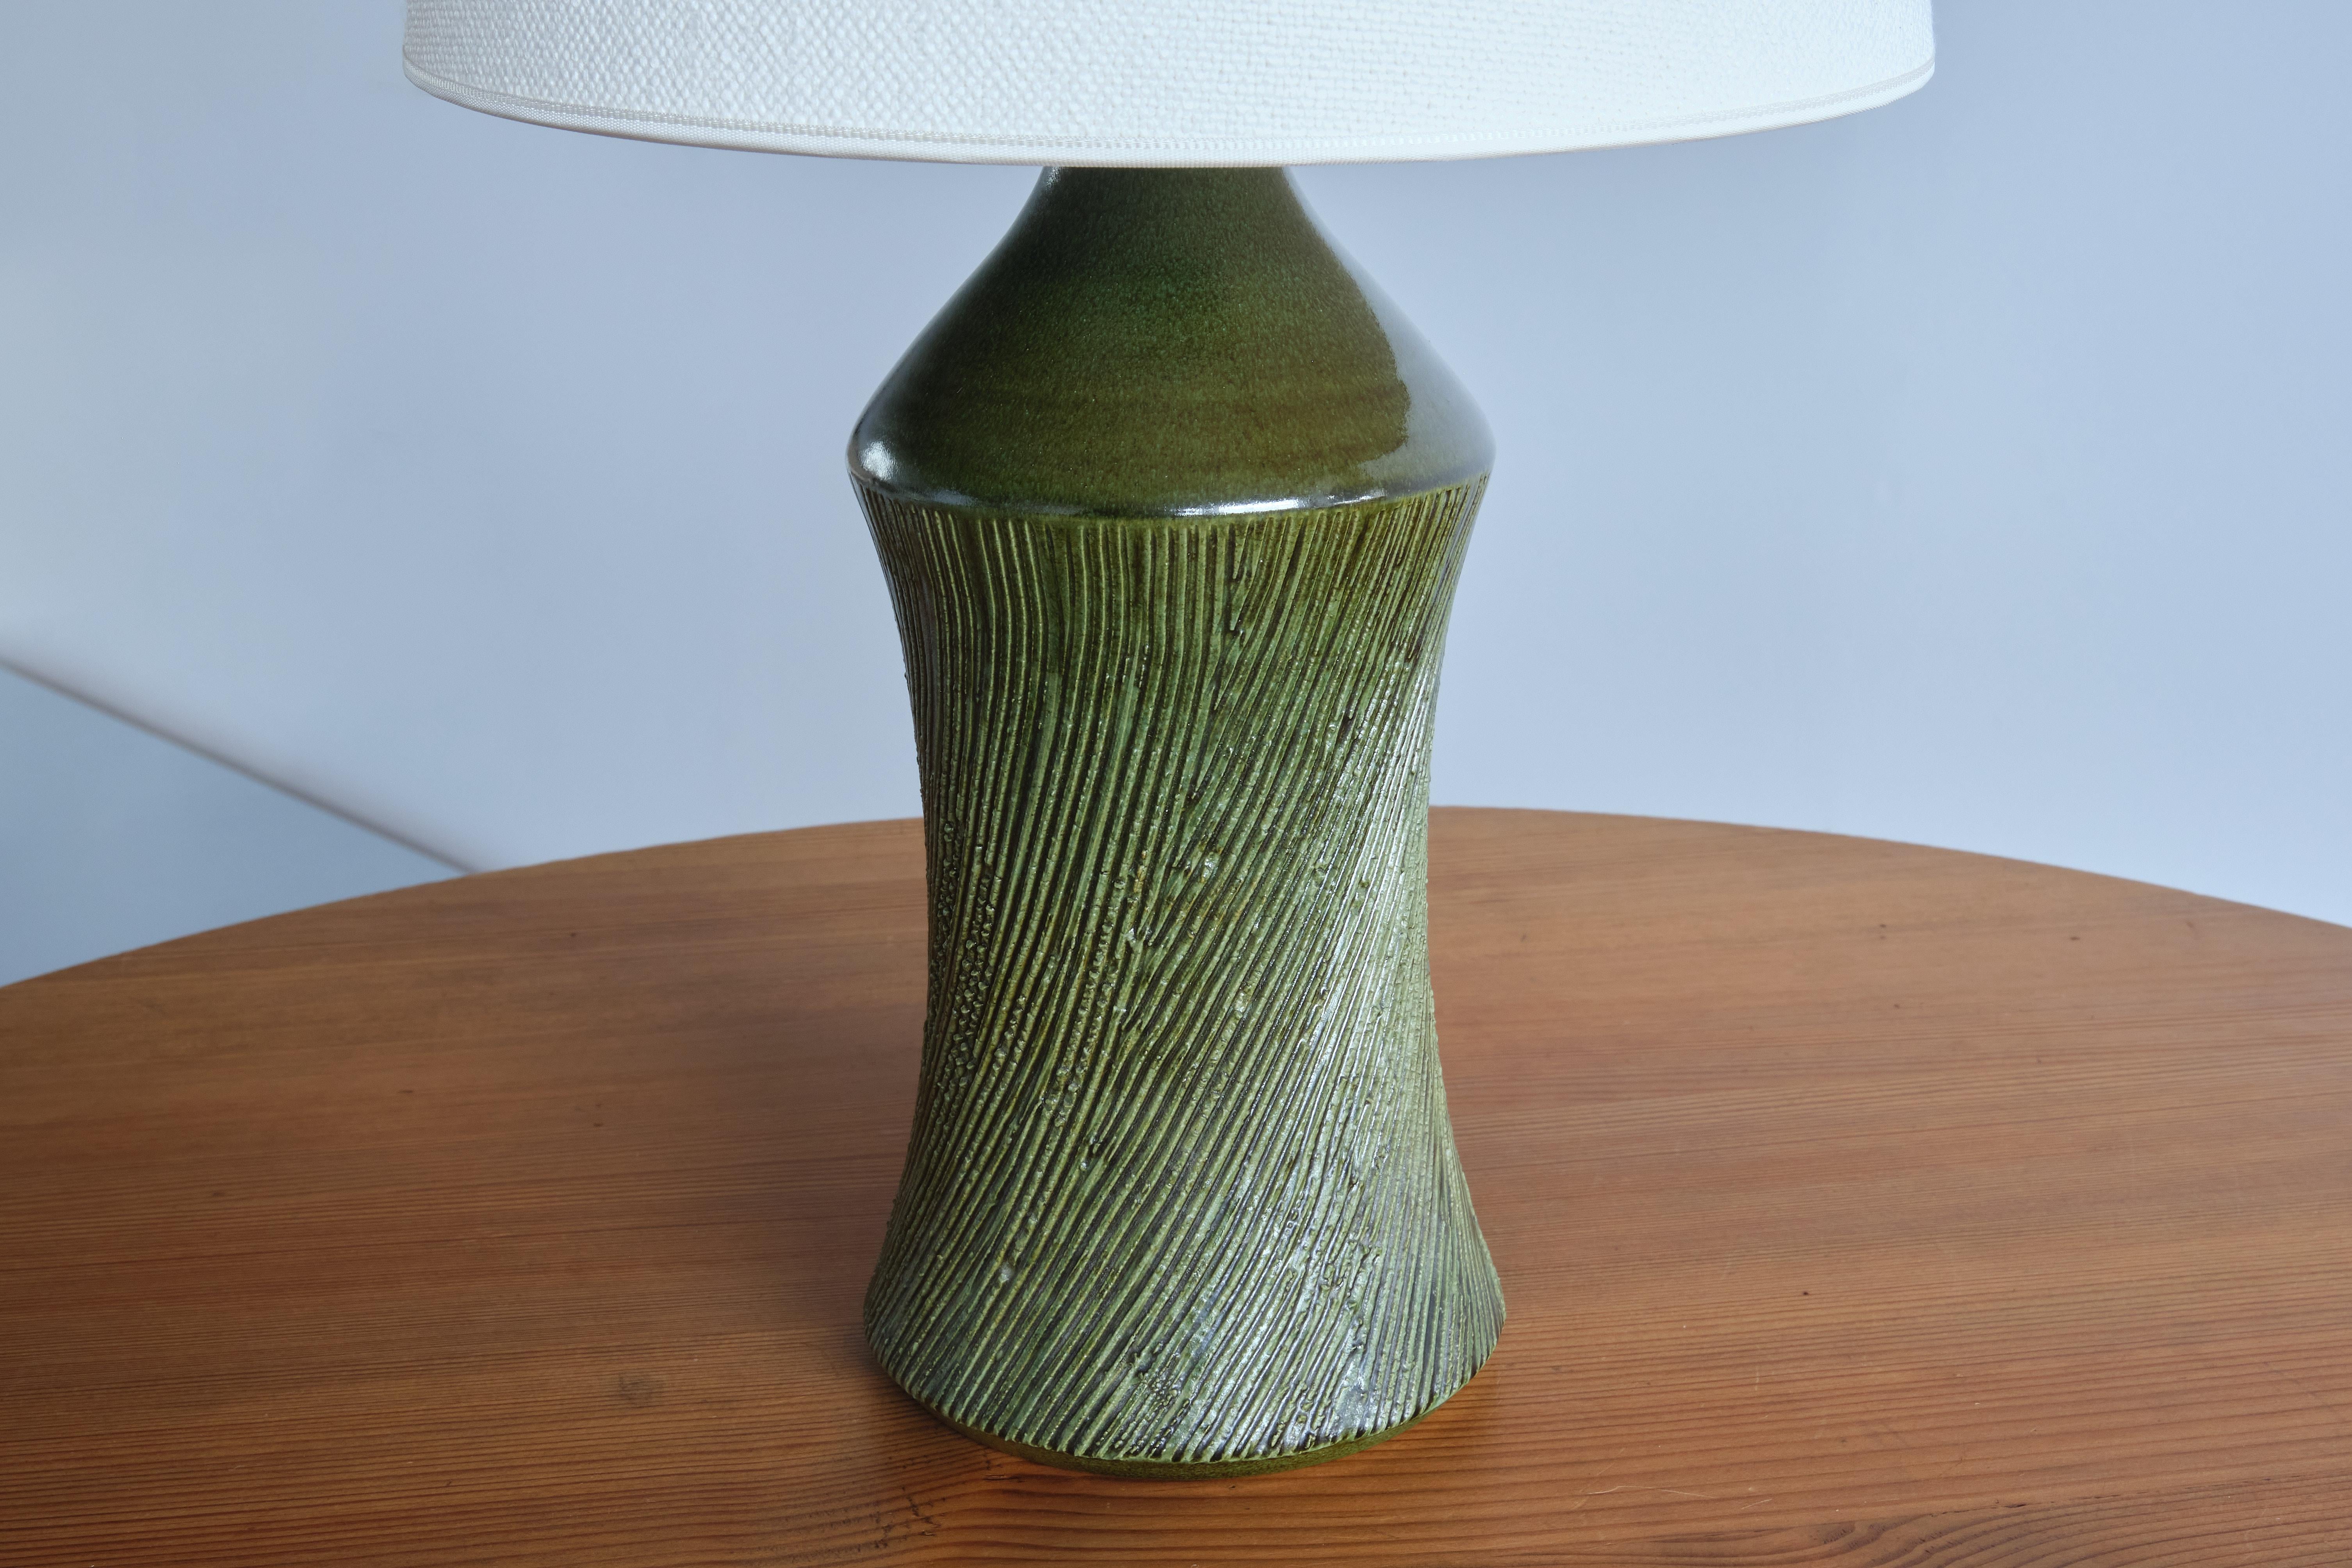 Fabric Henry Brandi Green Ceramic Table Lamp, Brandi Vejbystrand, Sweden, 1960s For Sale